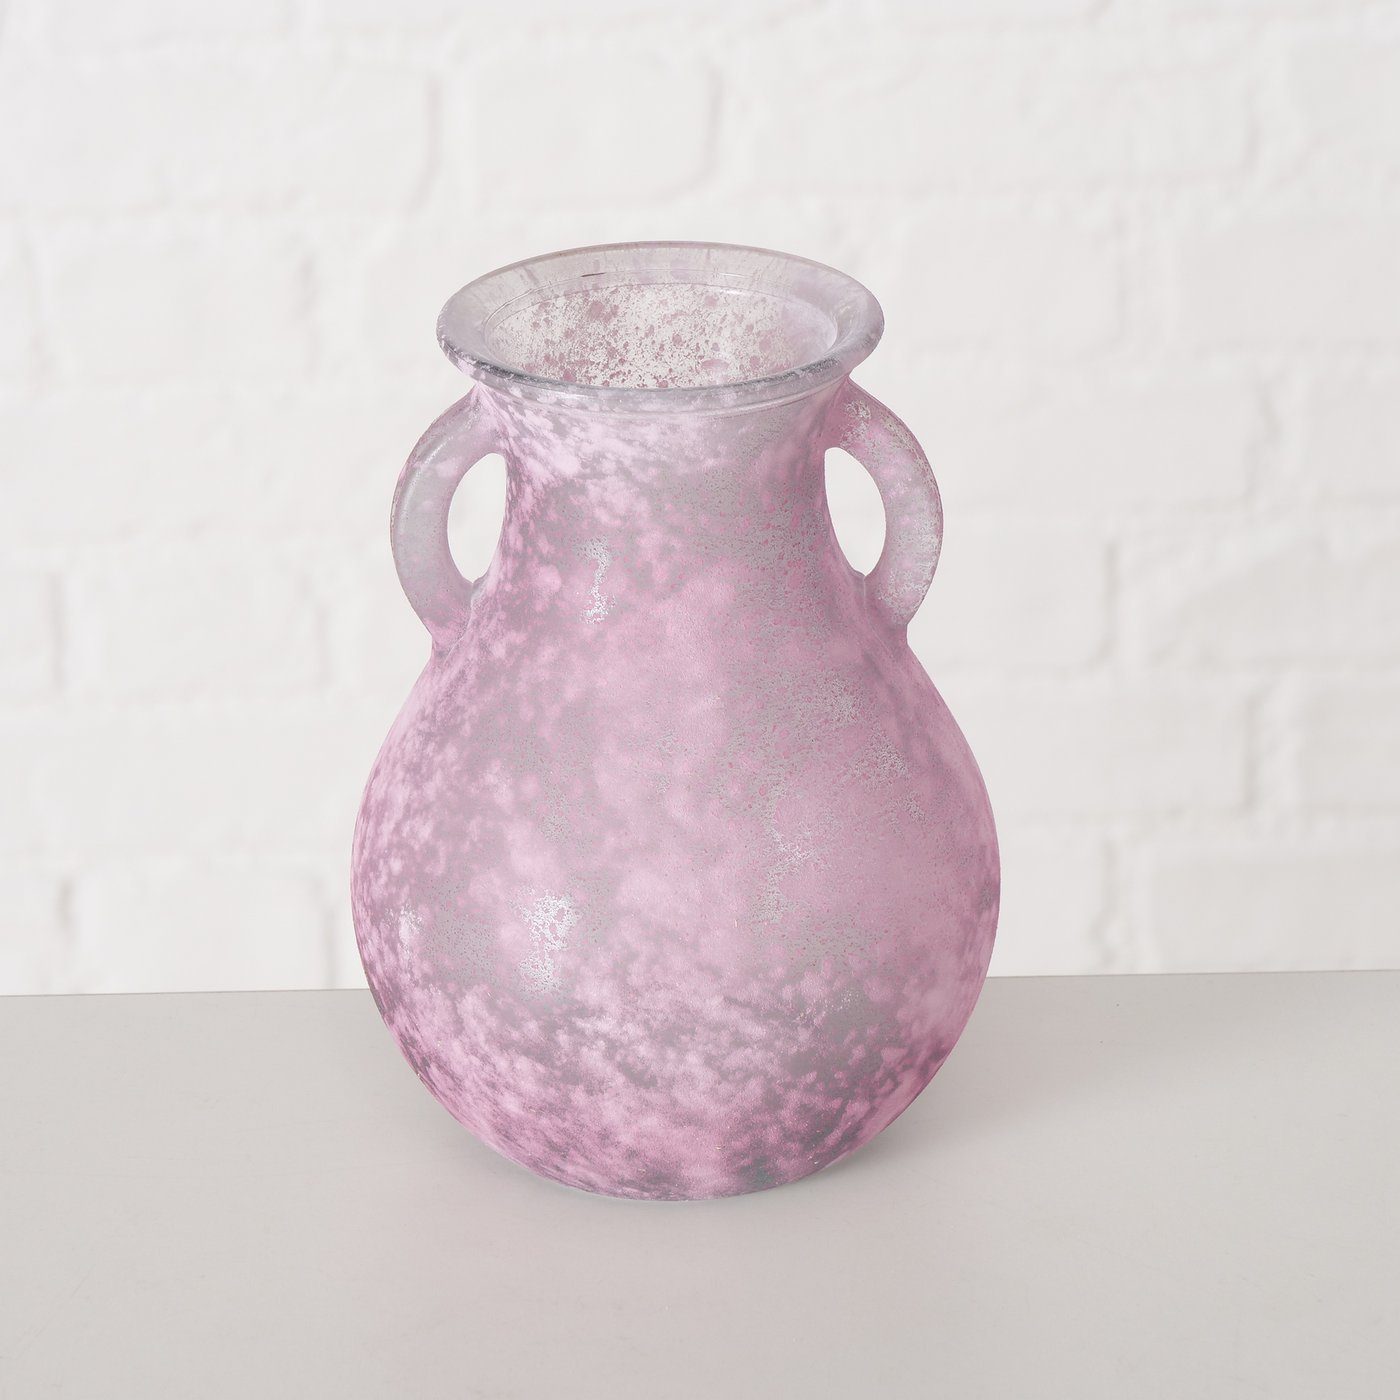 BOLTZE Dekovase 2er Set in aus "Pitcher" Glas Blumenvase lila/rosa, Vase